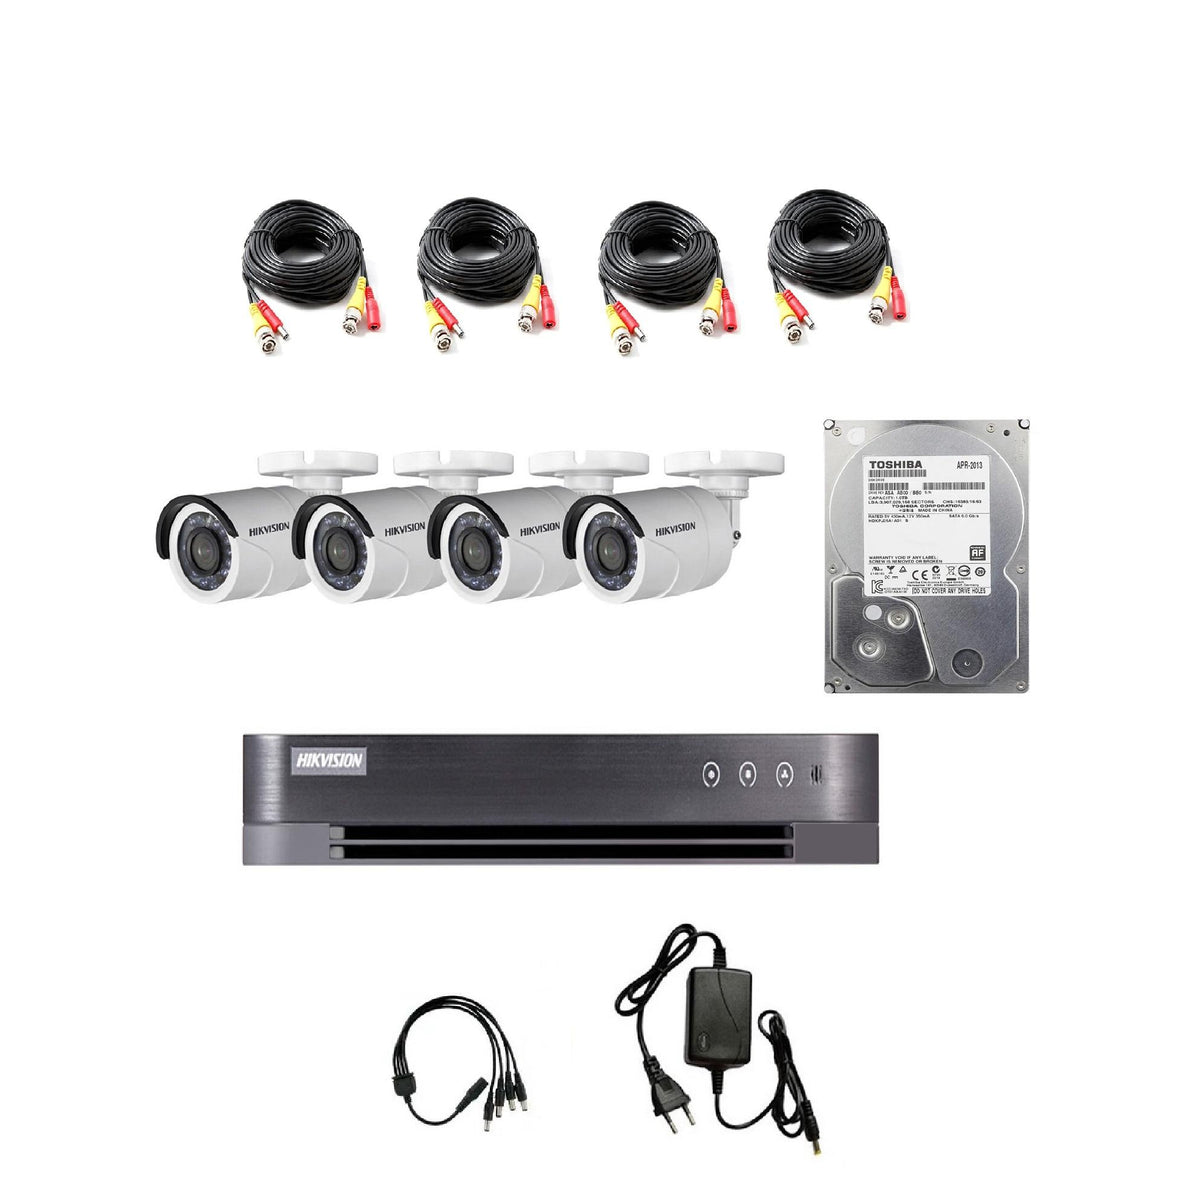 Kit DVR camaras de seguridad: DRV 4 ch y 4 camaras - Virtual-go